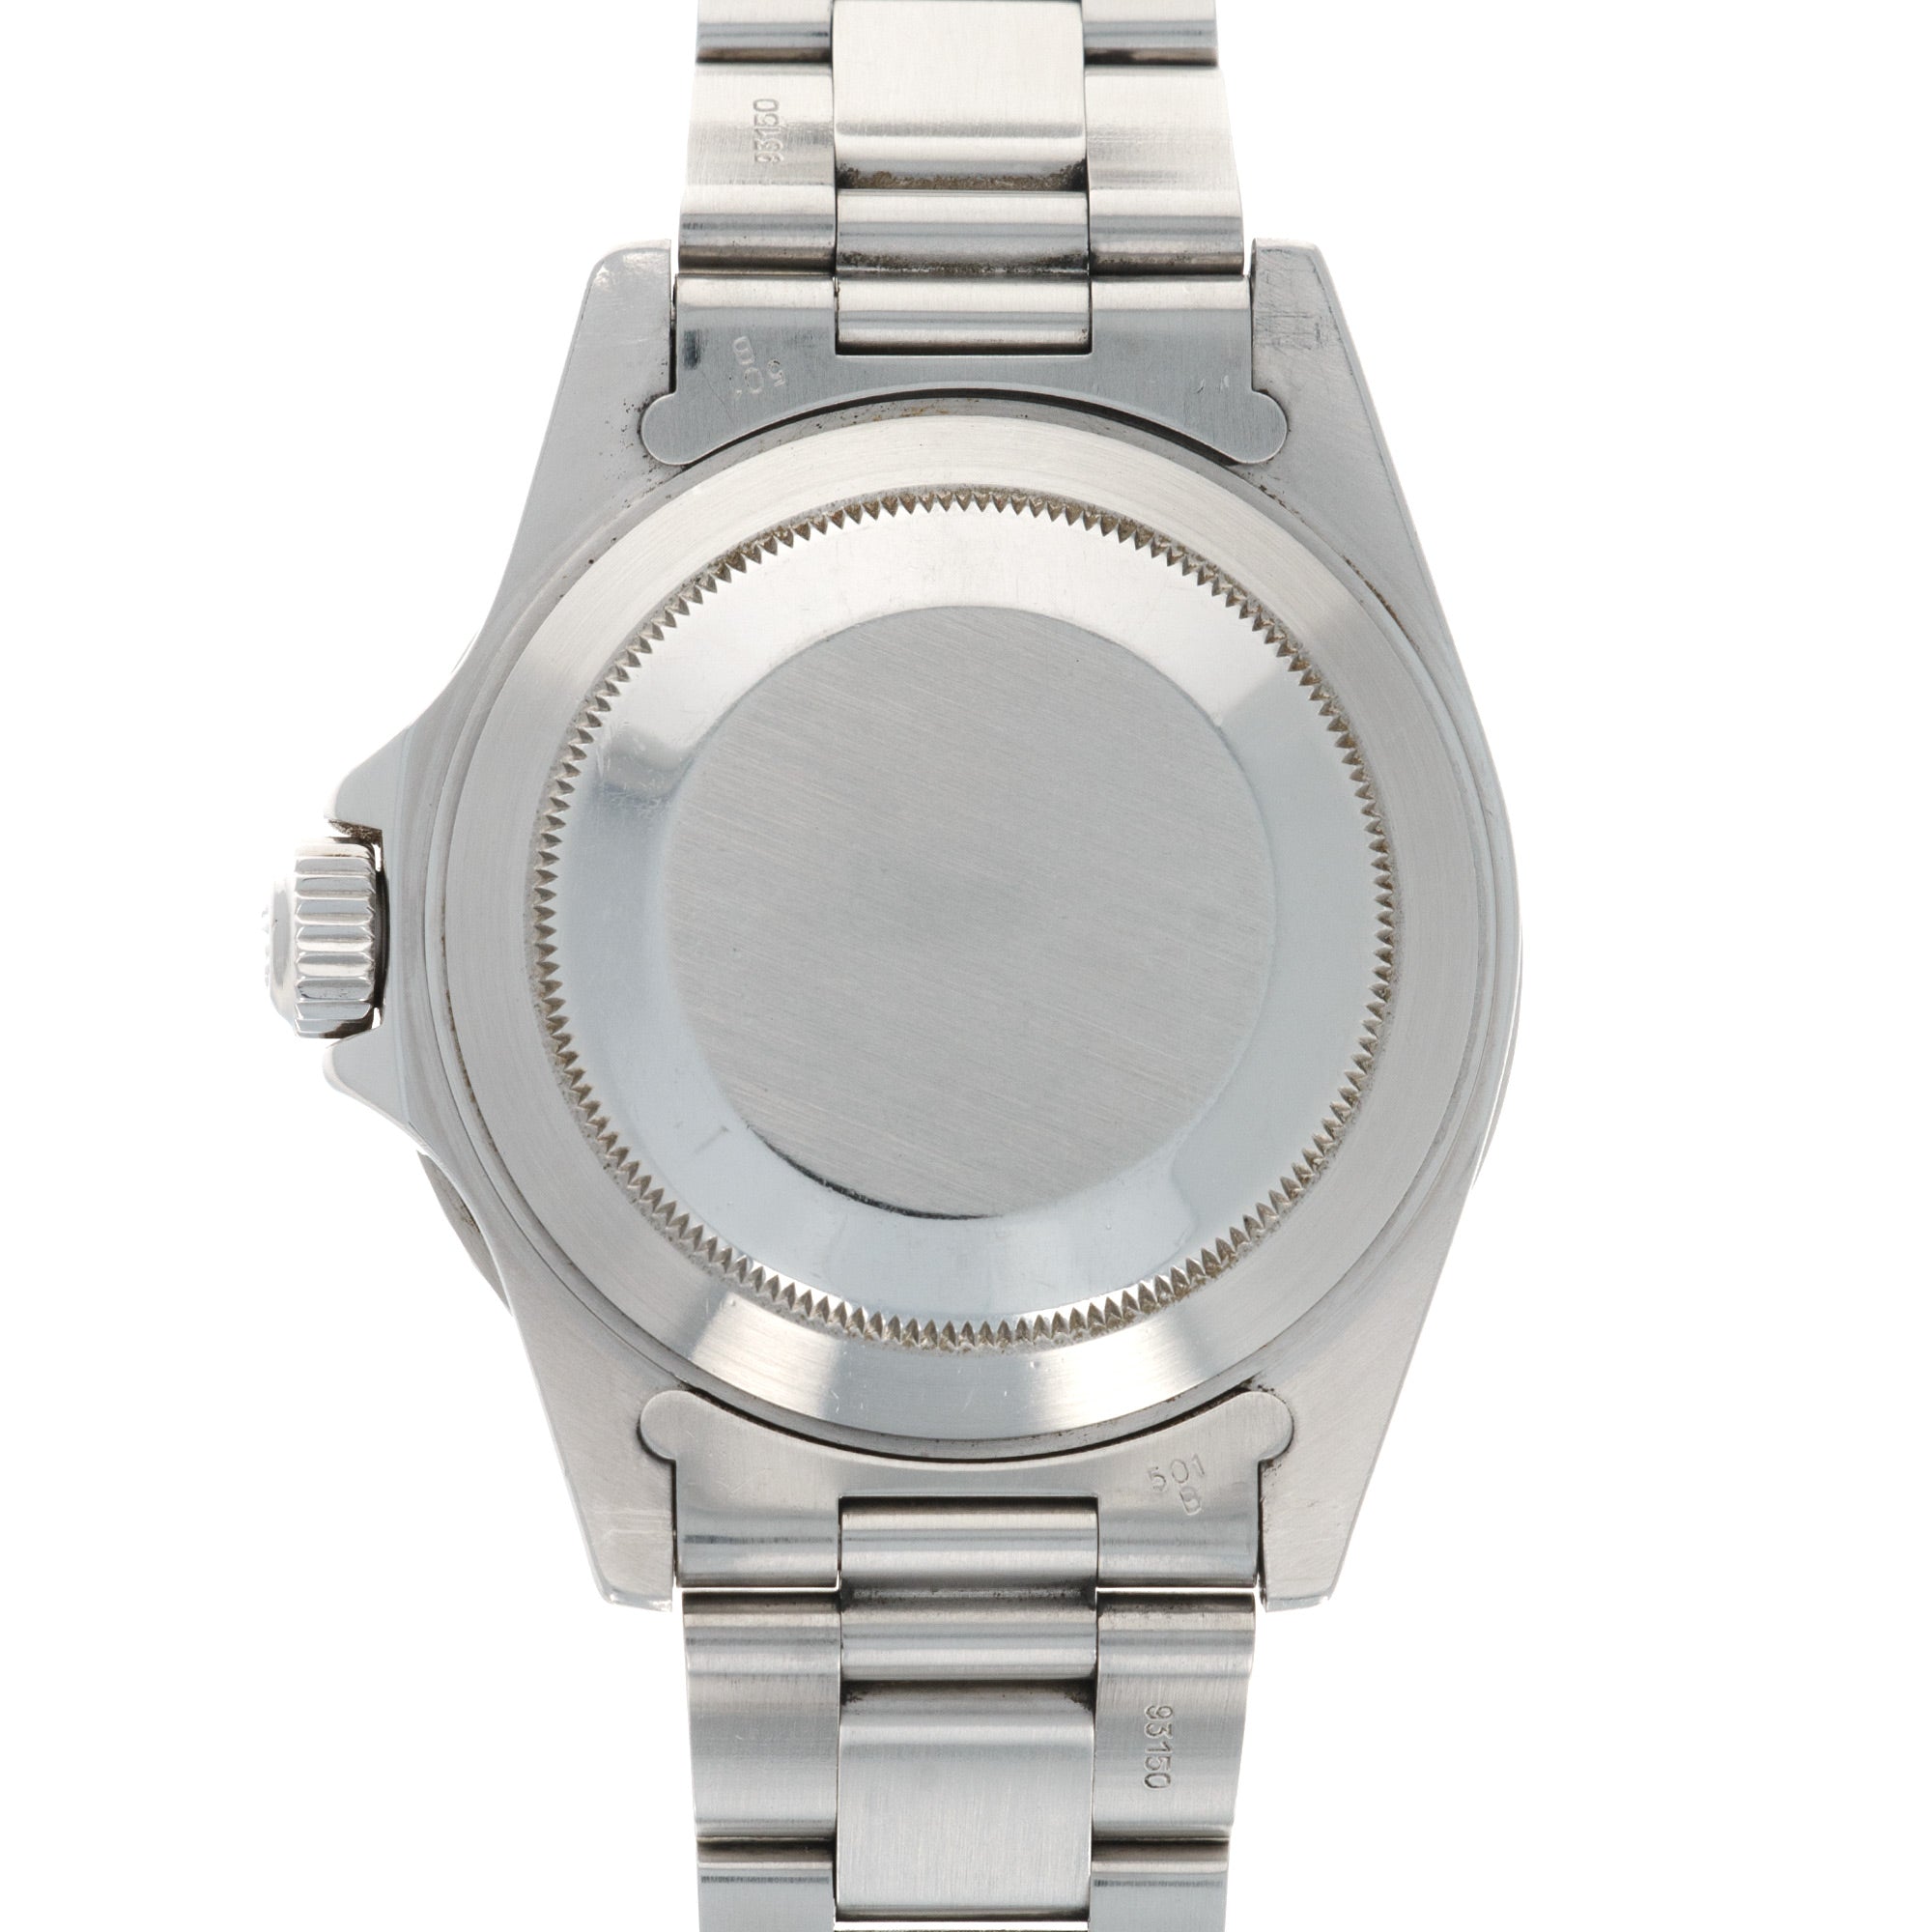 Rolex - Rolex Tiffany Submariner Watch Ref. 16800, with Tiffany &amp; Co Warranty - The Keystone Watches